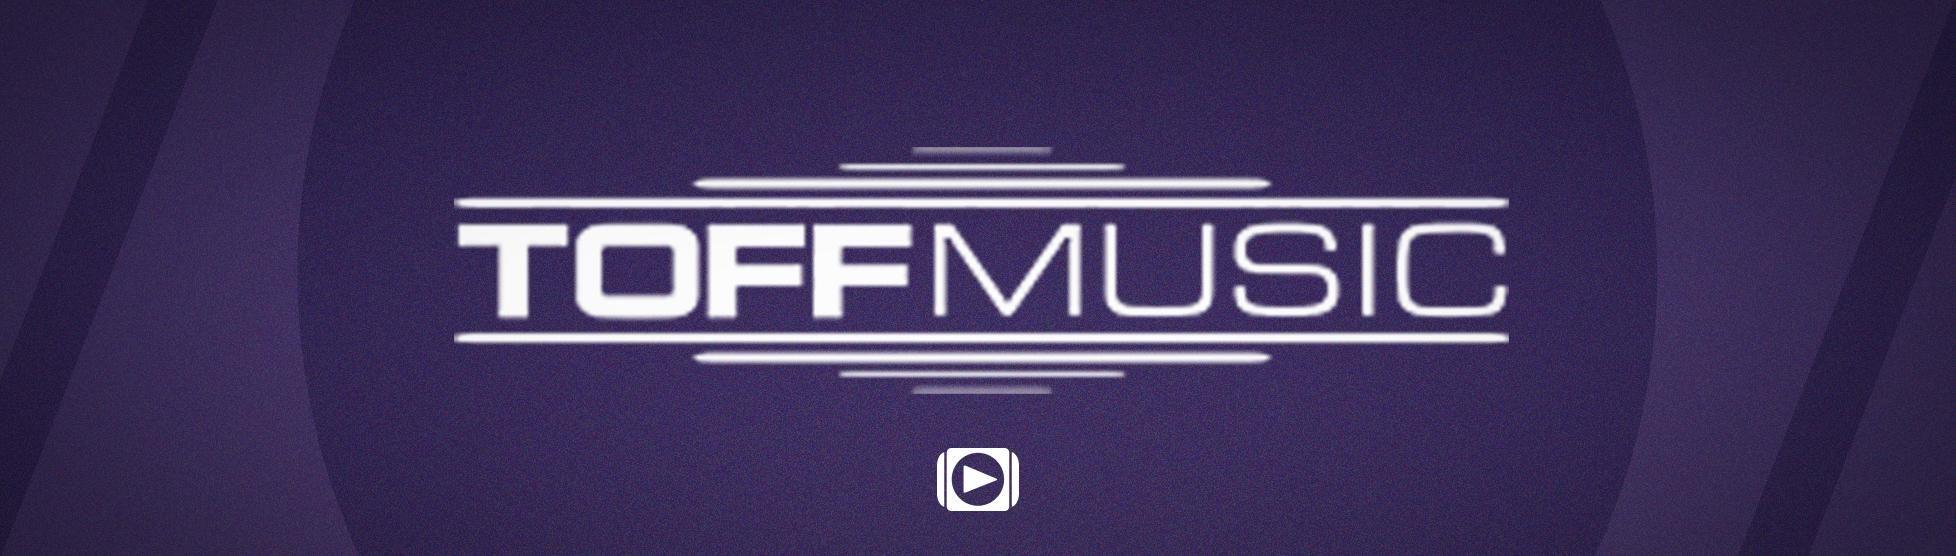 Toff Logo - Toff Music - Artists - Hardstyle.com: Home of Hardstyle